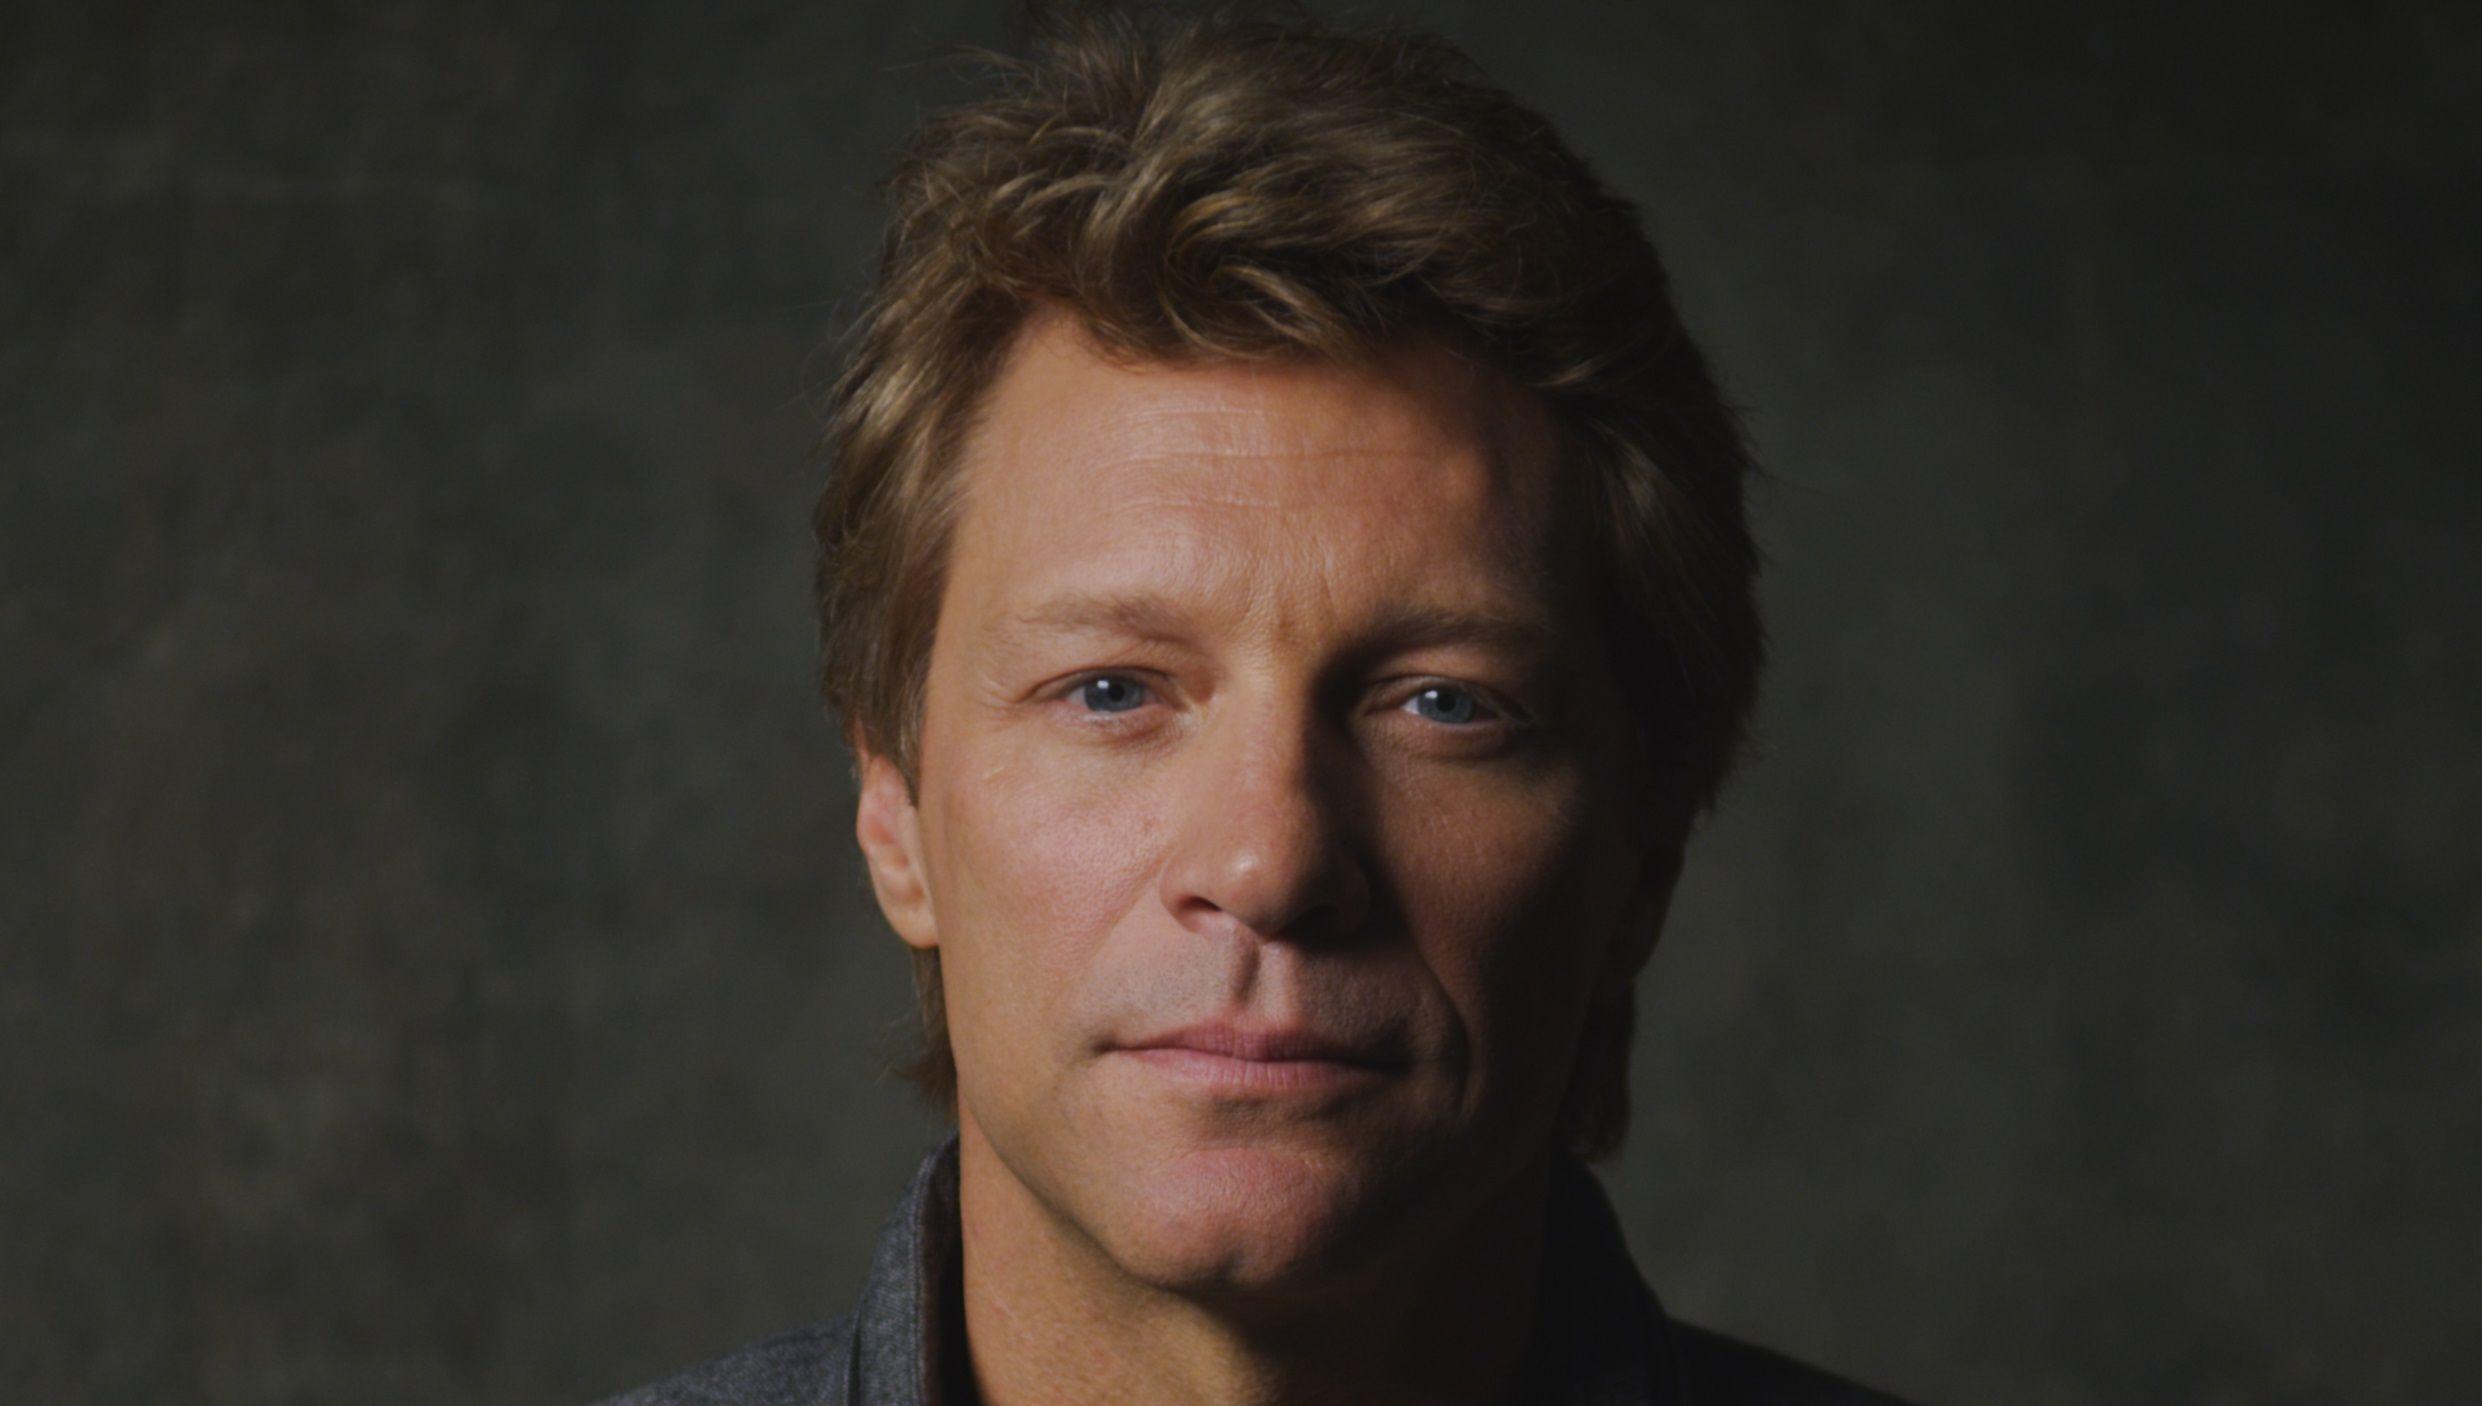 Jon Bon Jovi Wallpaper Image Photo Picture Background